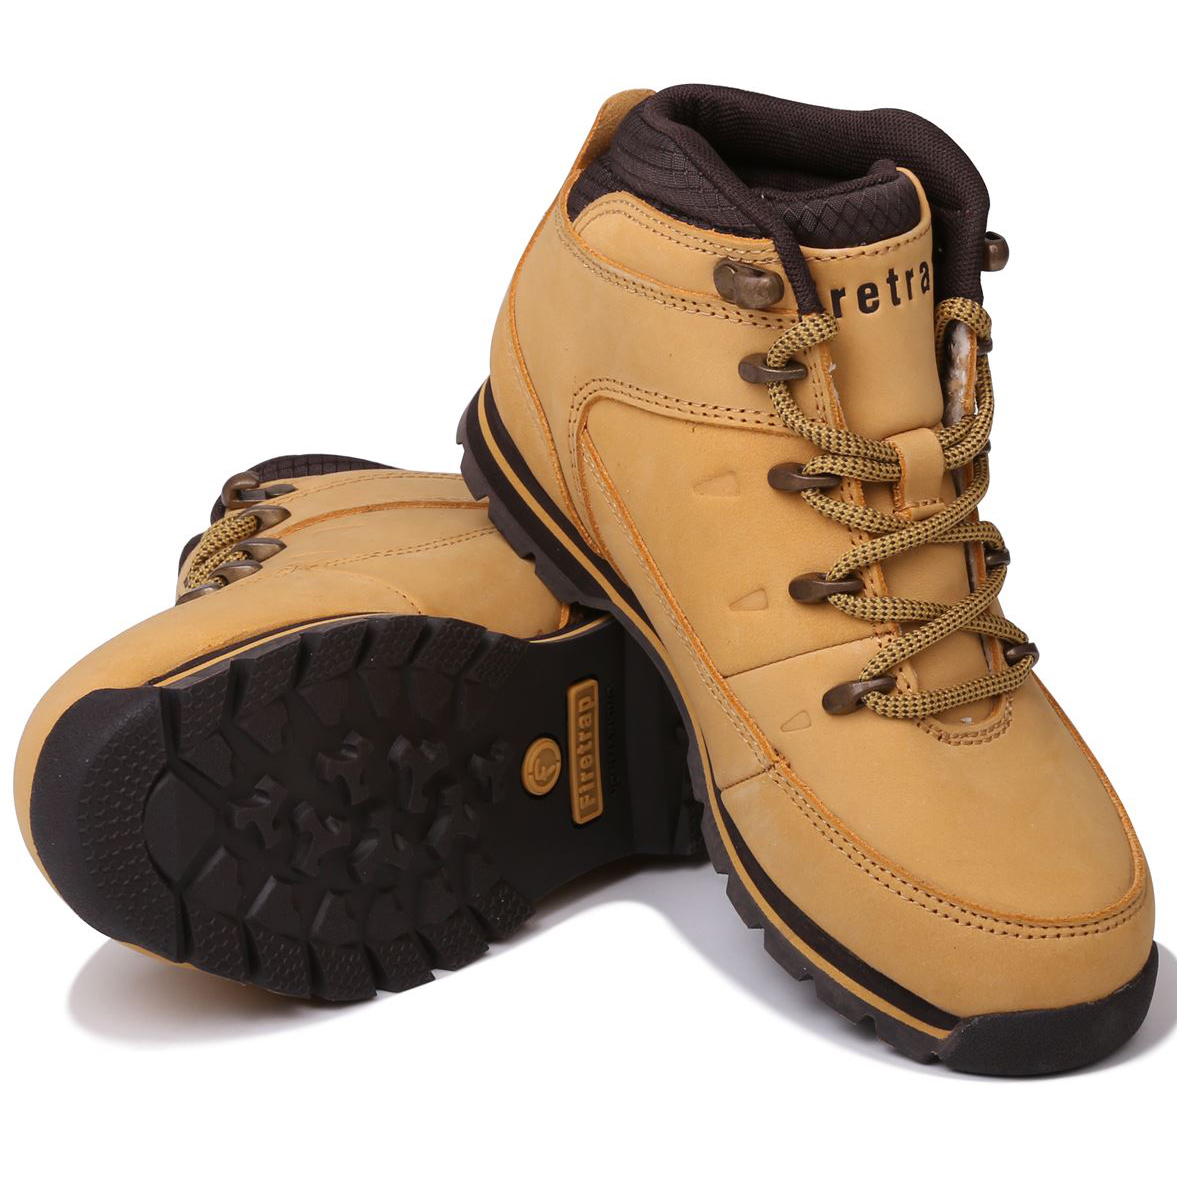 firetrap hiking boots